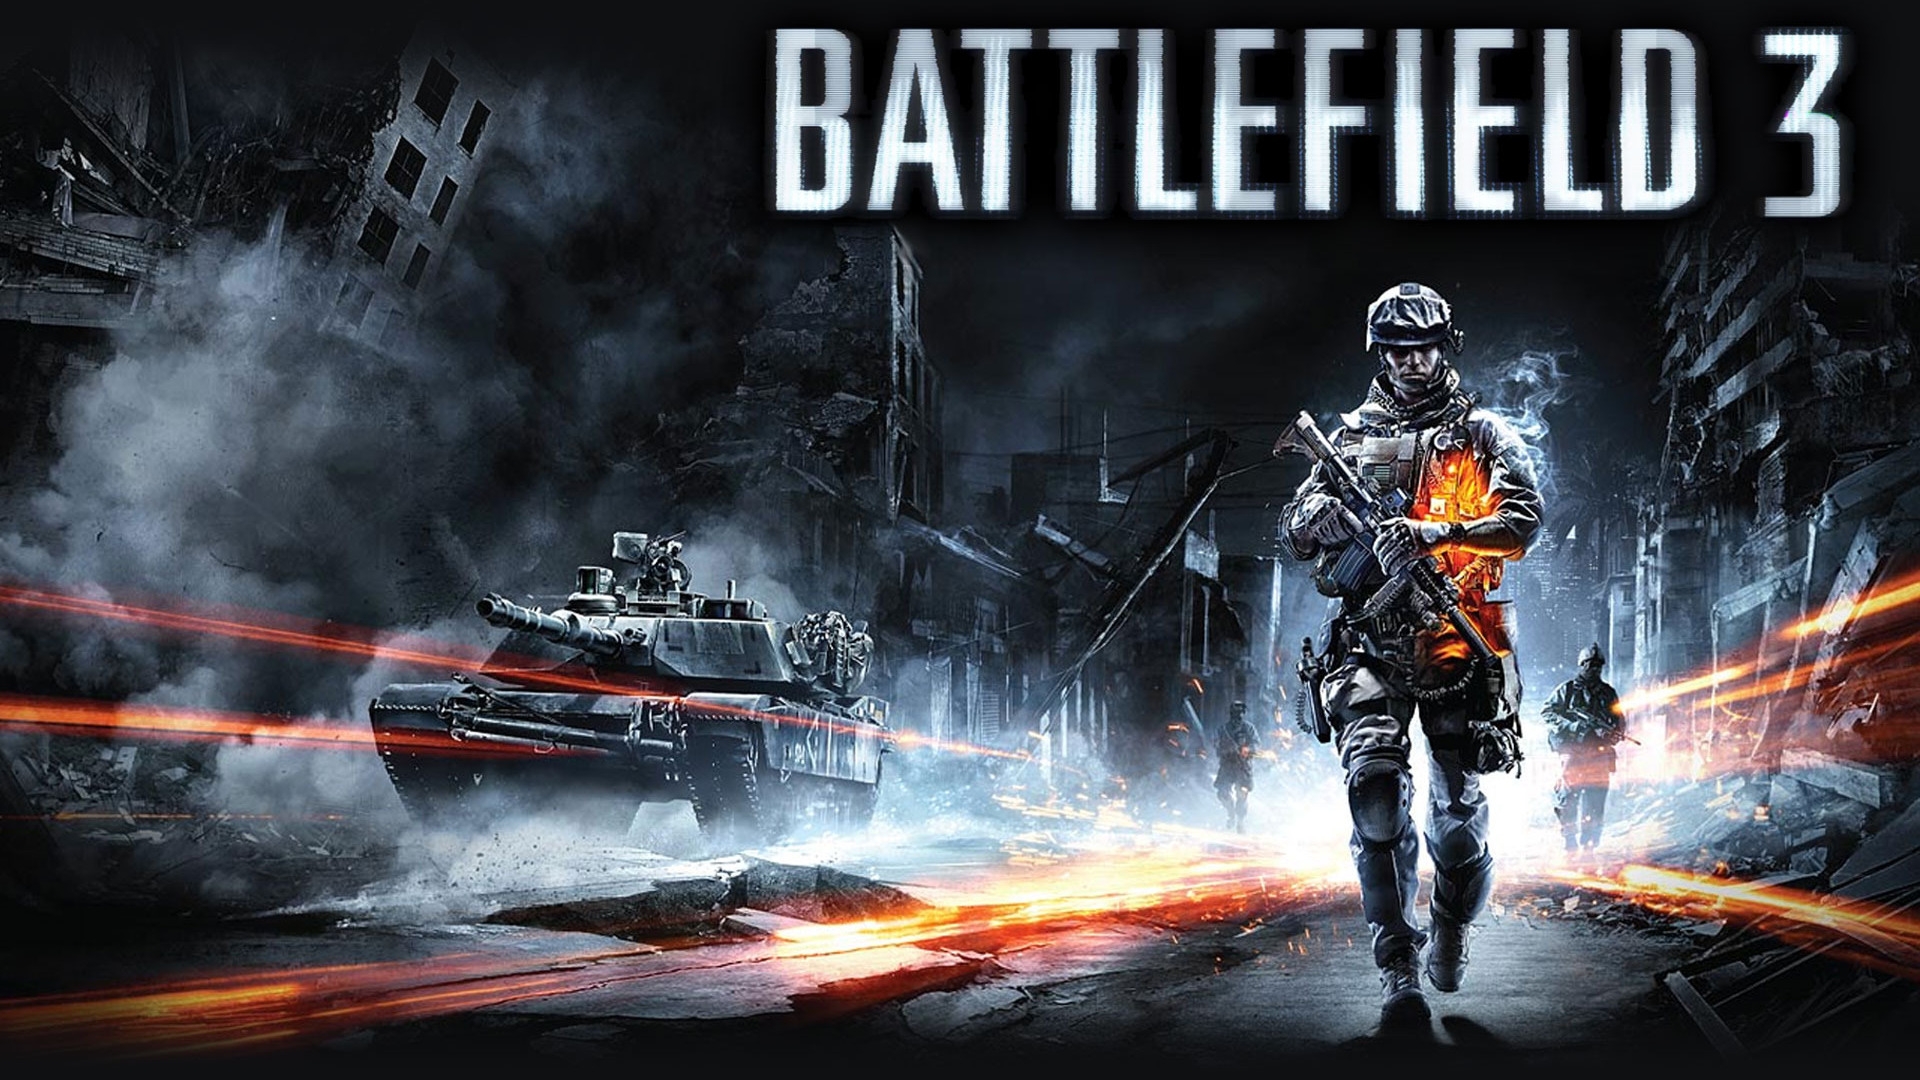 Let’s Play Battlefield 3